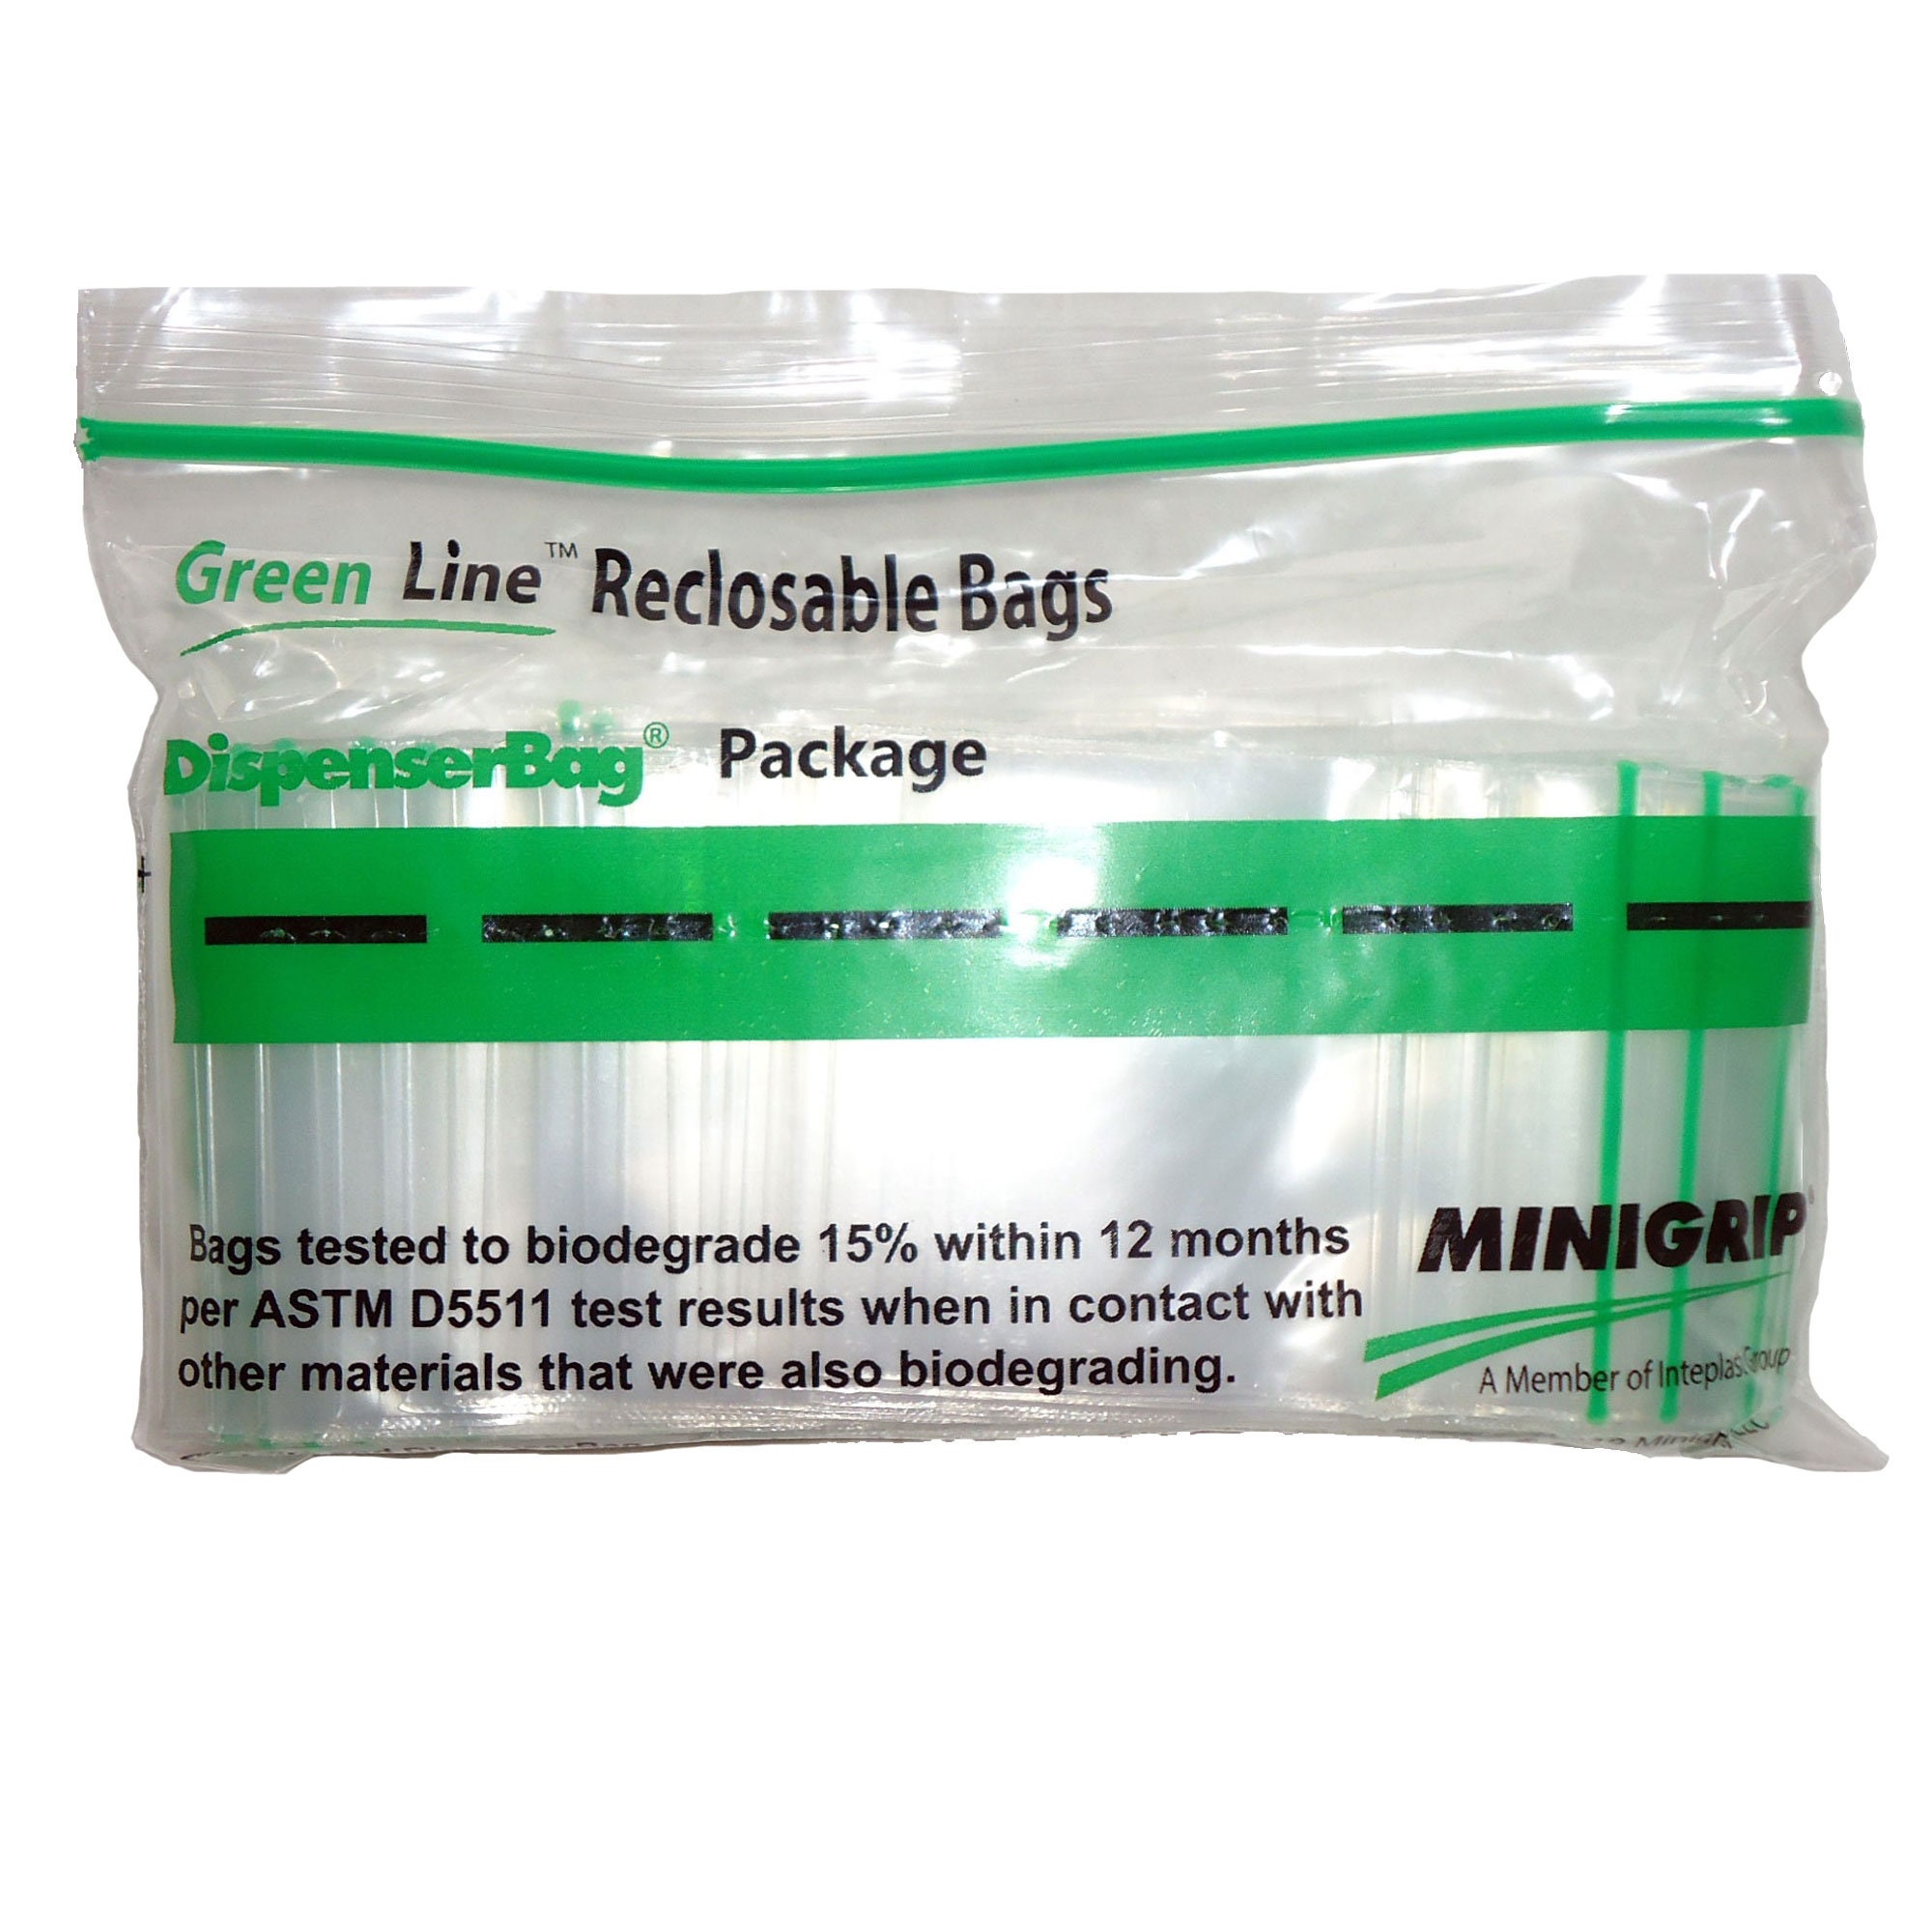 Minigrip® zipperbags. The original Minigrip bags, Minigrip ziplock